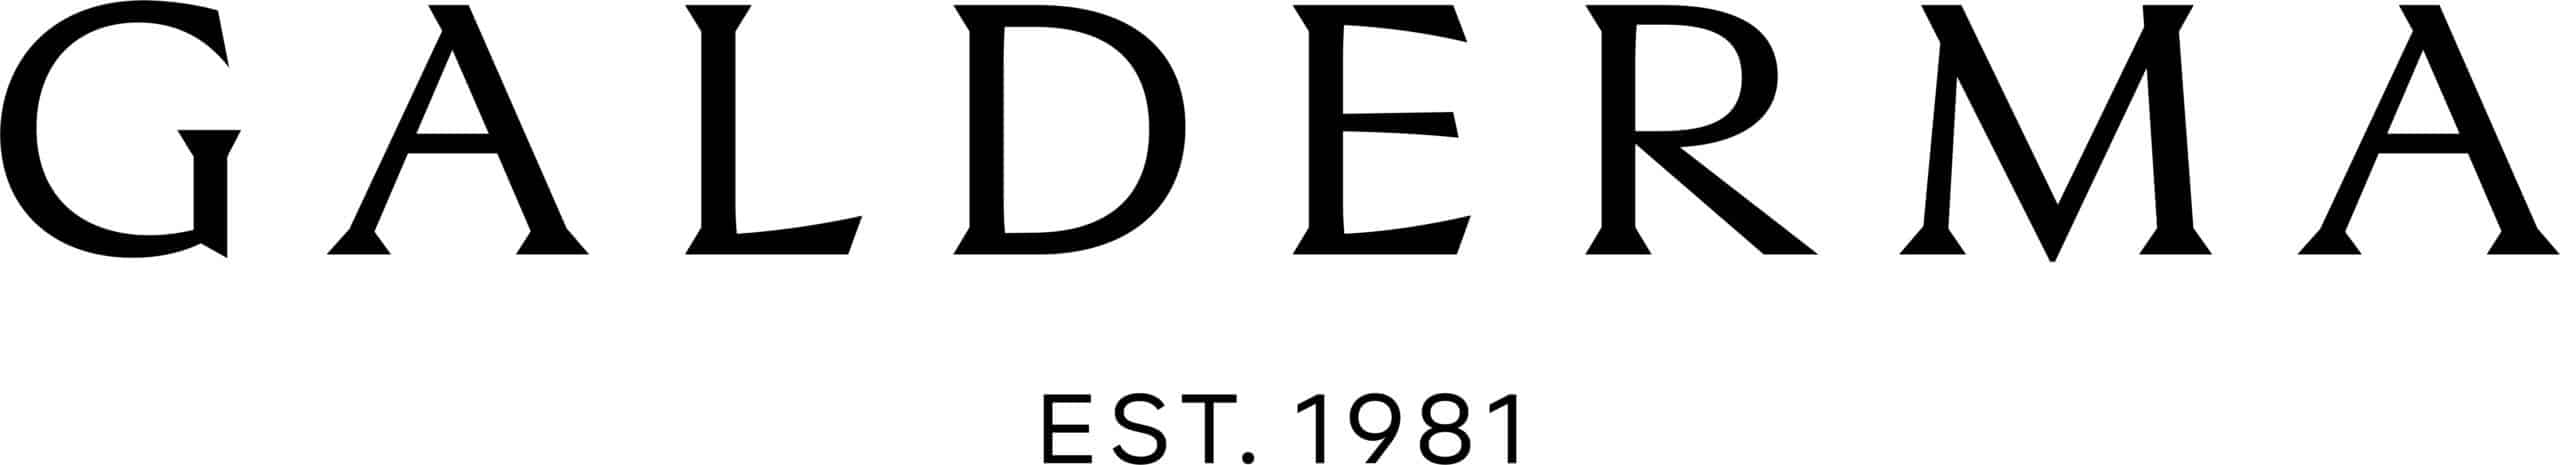 Galderma-Logo